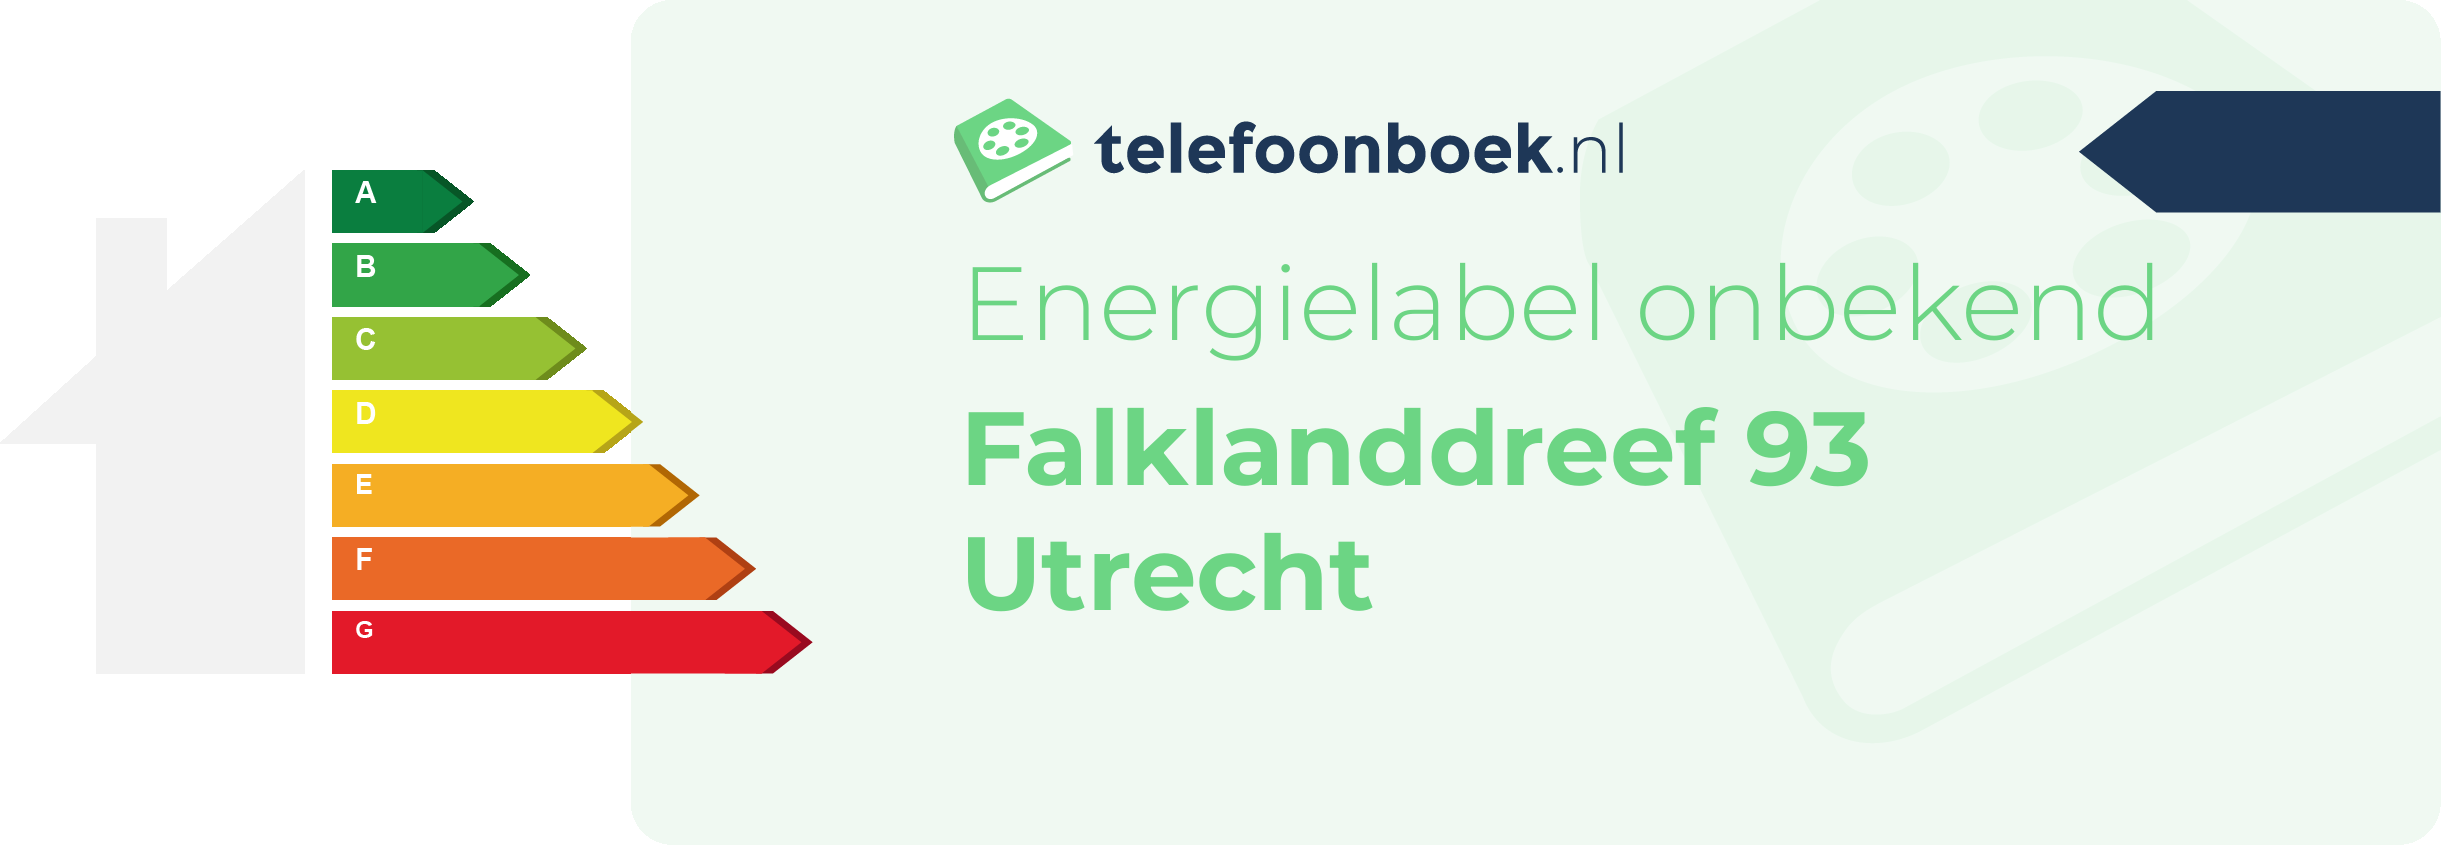 Energielabel Falklanddreef 93 Utrecht